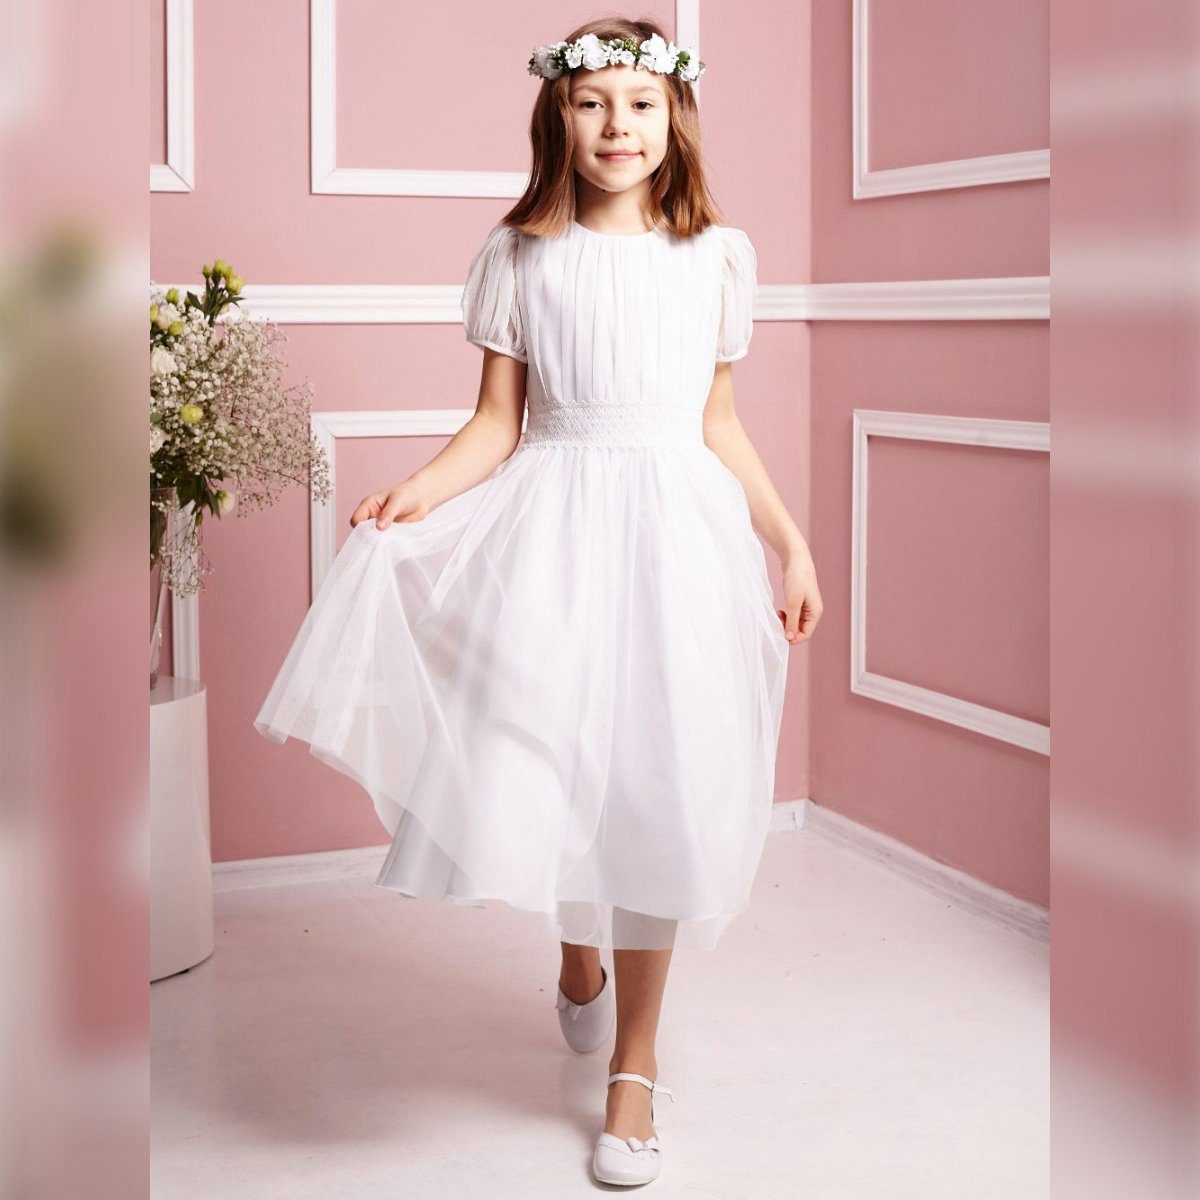 Dalary Partykleid Blumenmädchenkleid Kommunionkleid Dalary DK-407 Weiß